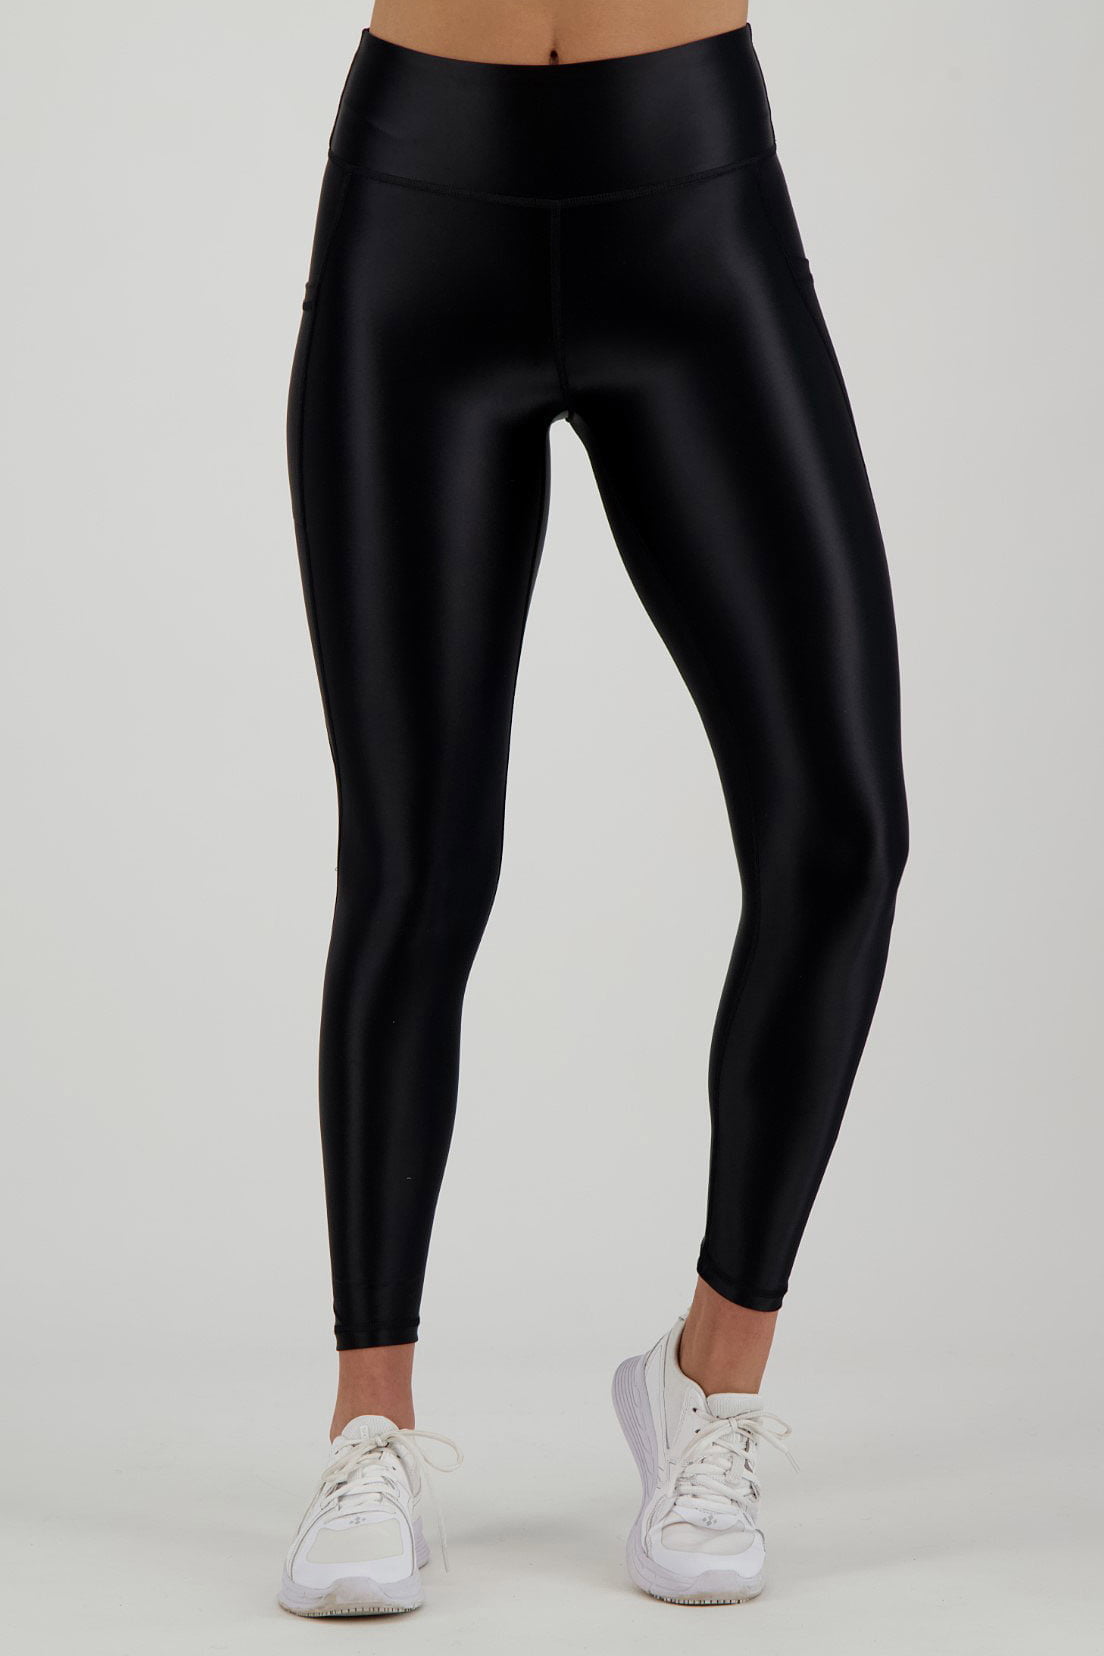 Shiny High Waist Pocket Legging black - Sports leggings - FITTwear